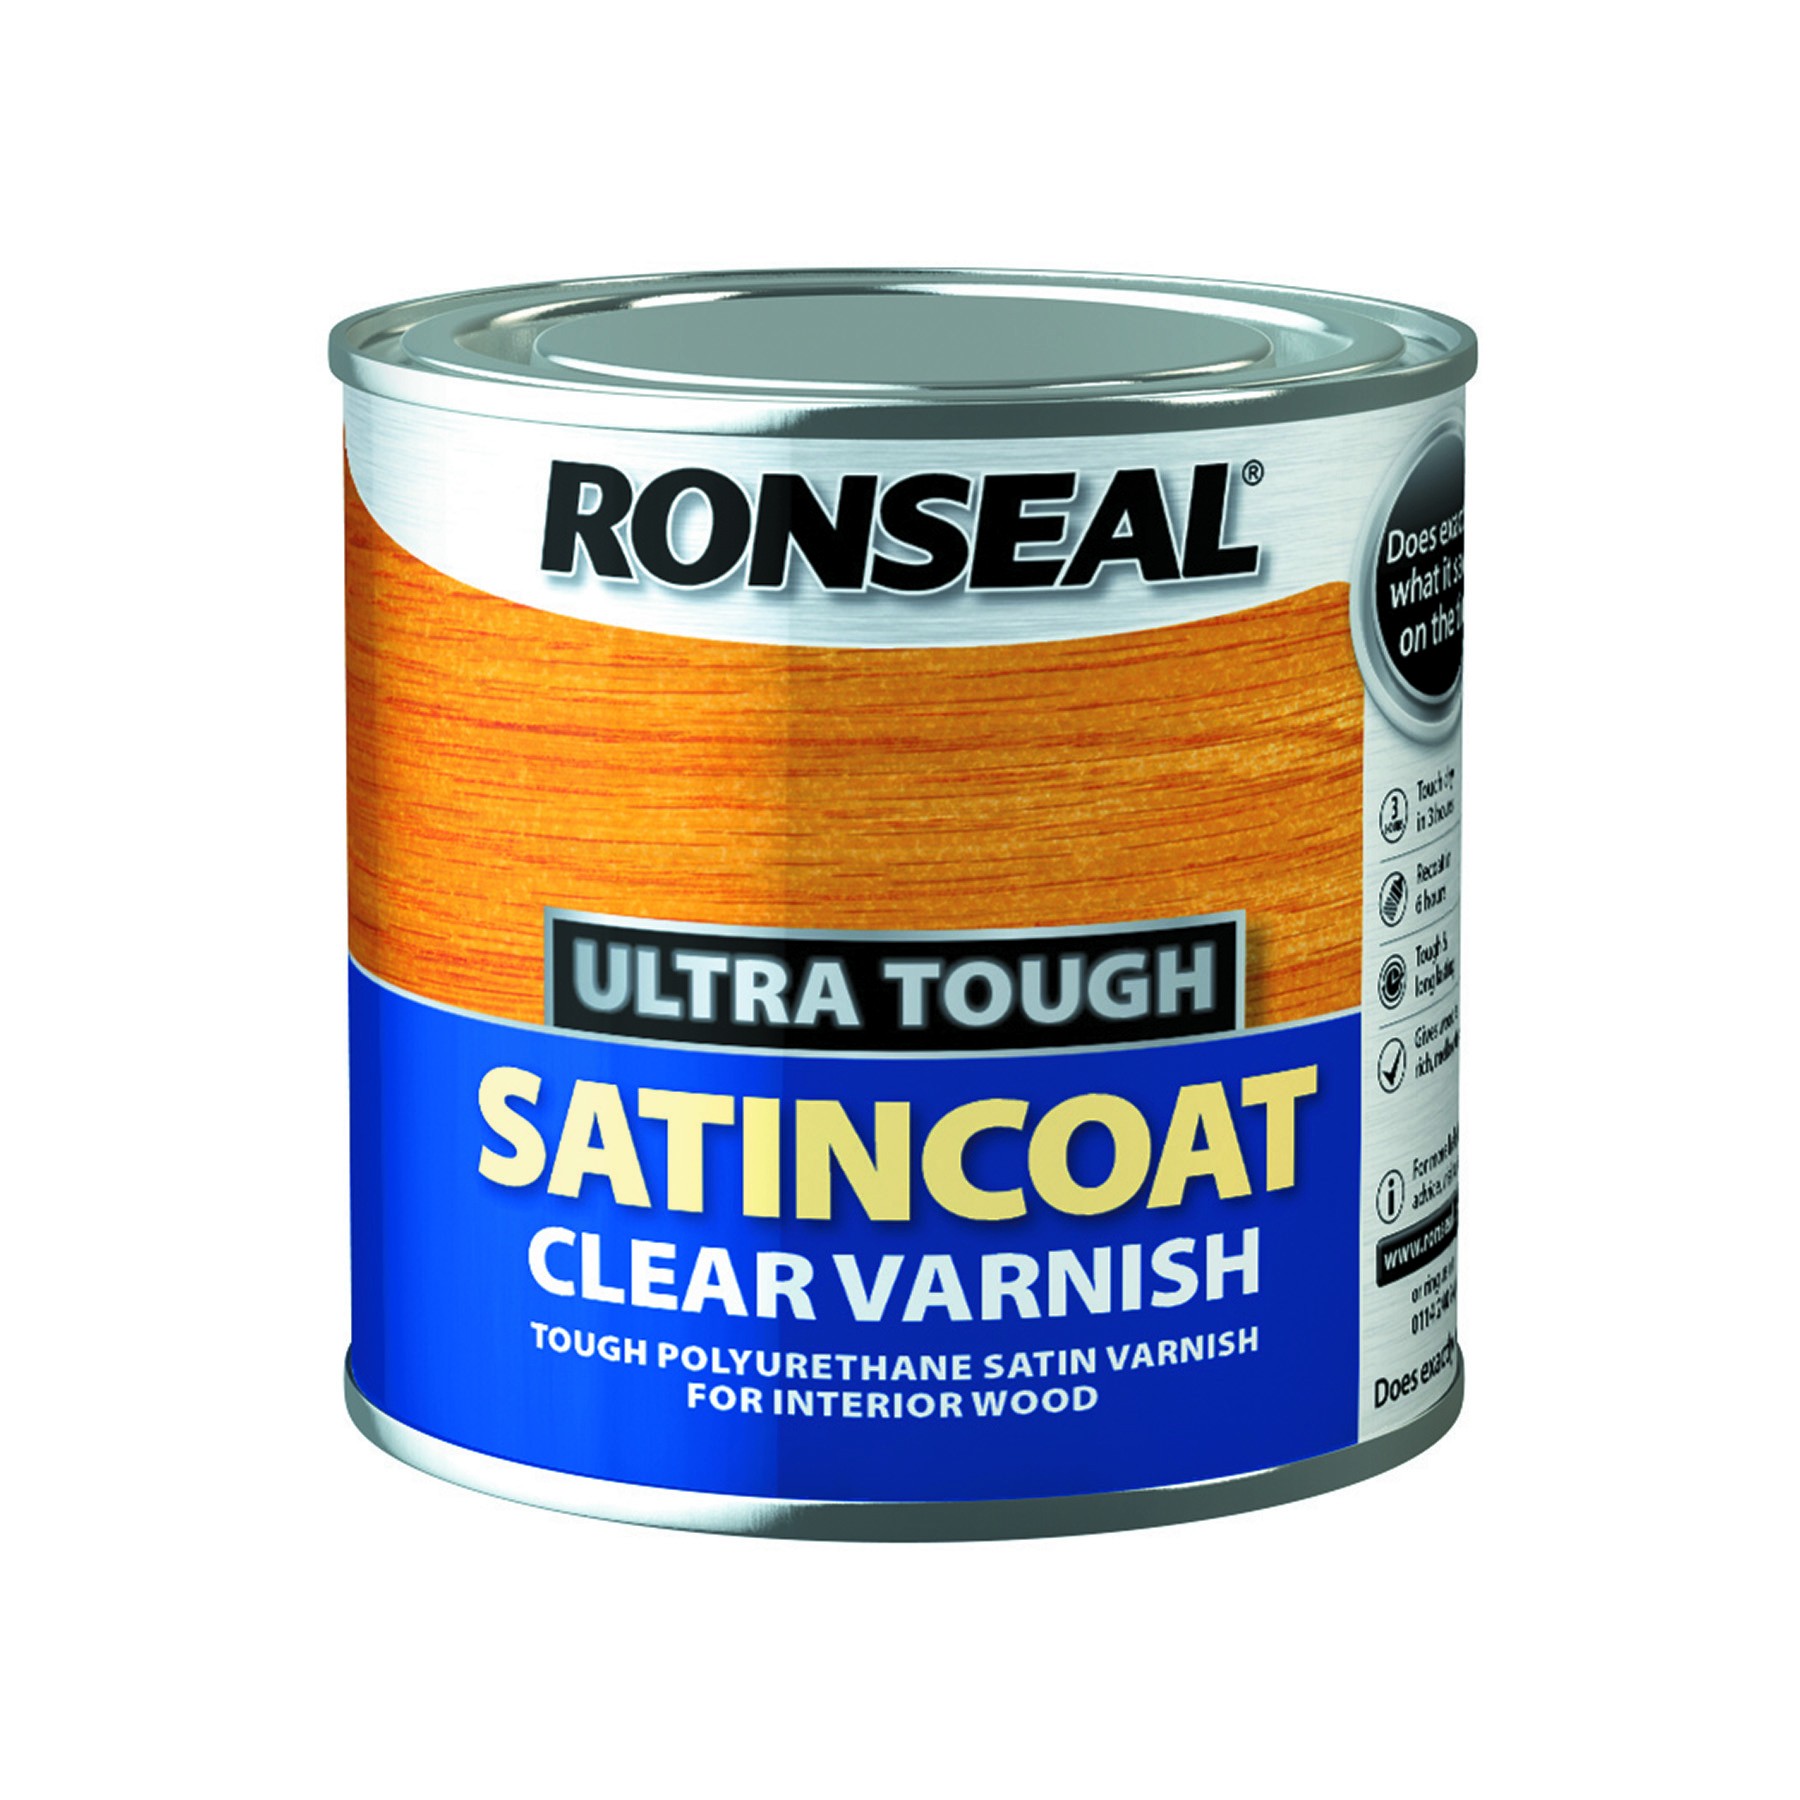 Ronseal Ultra Tough Satincoat Clear Varnish 250ml [RONS9009]